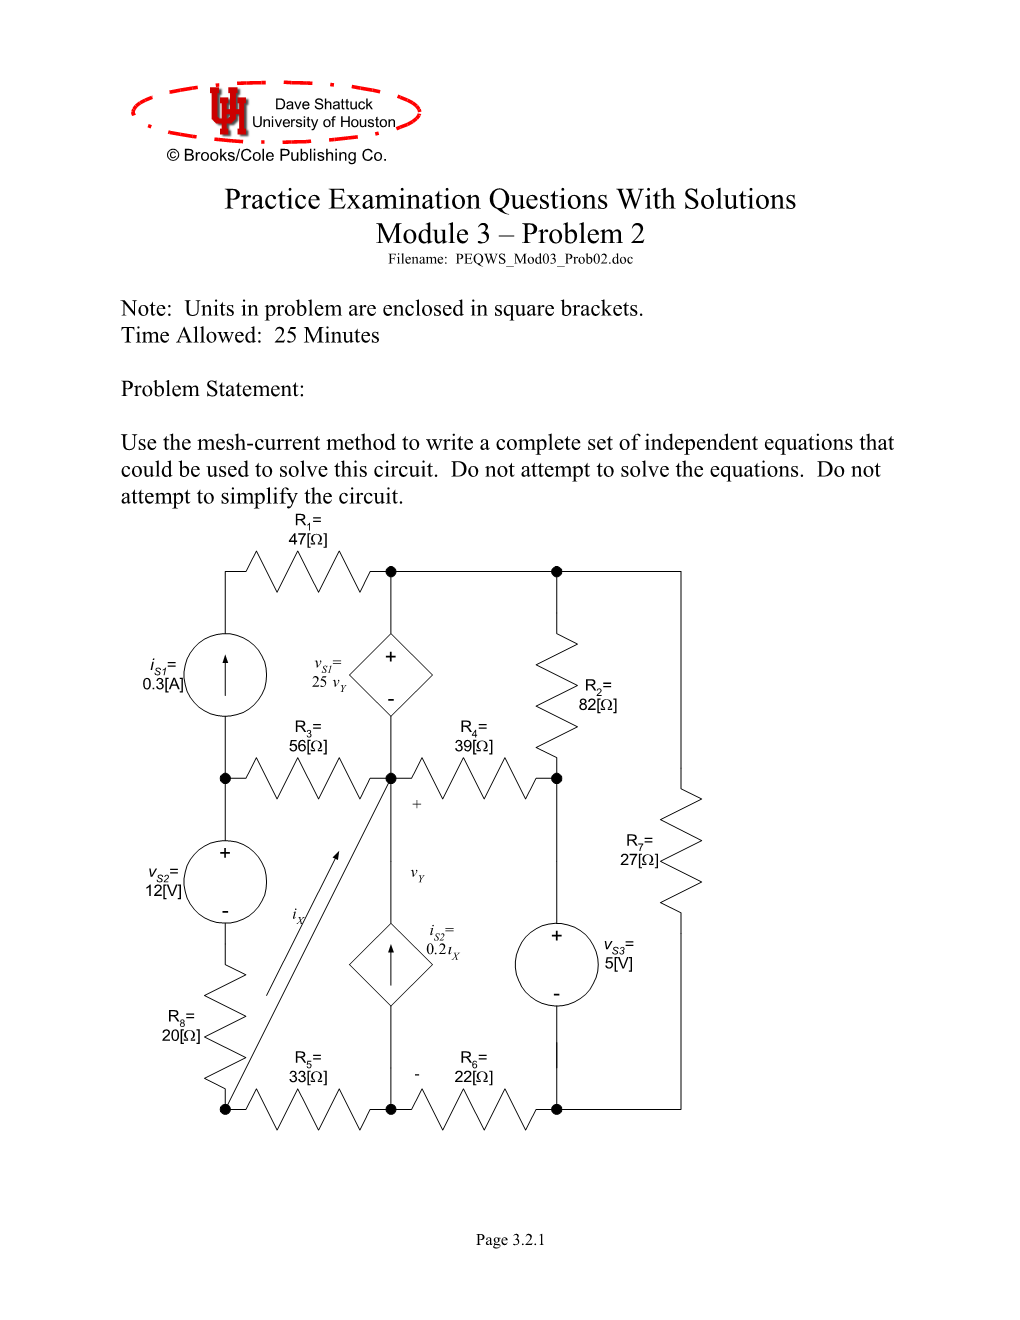 Practice Examination Module 3 Problem 2